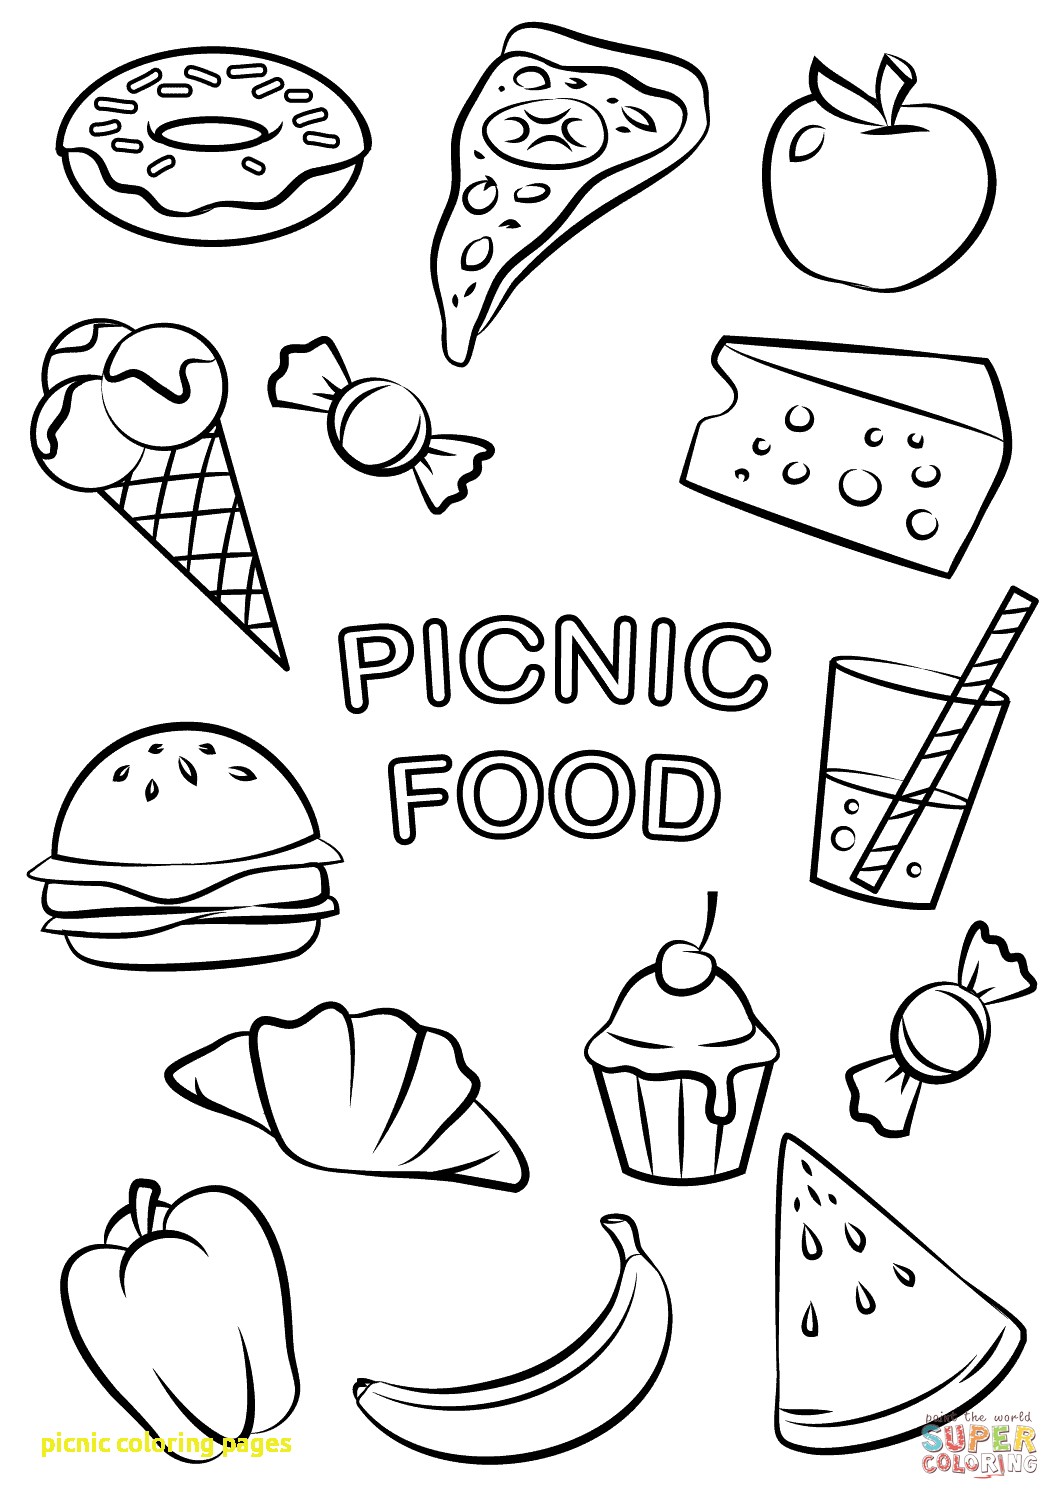 picnic-scene-drawing-at-getdrawings-free-download